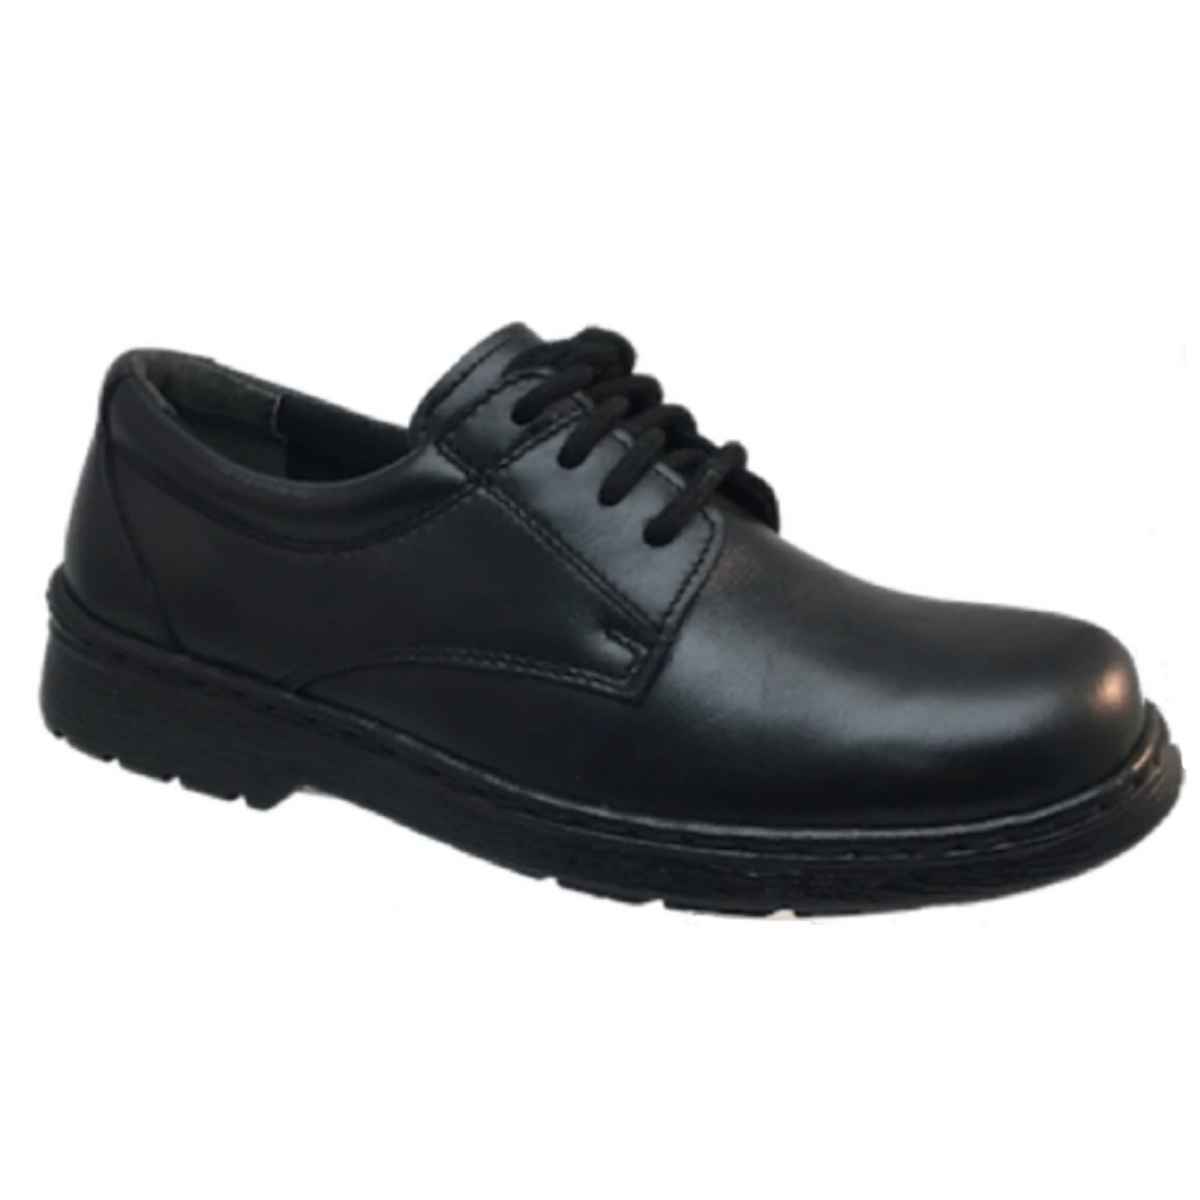 Sam Youth Black Leather Oxfords - Kids Shoe Box